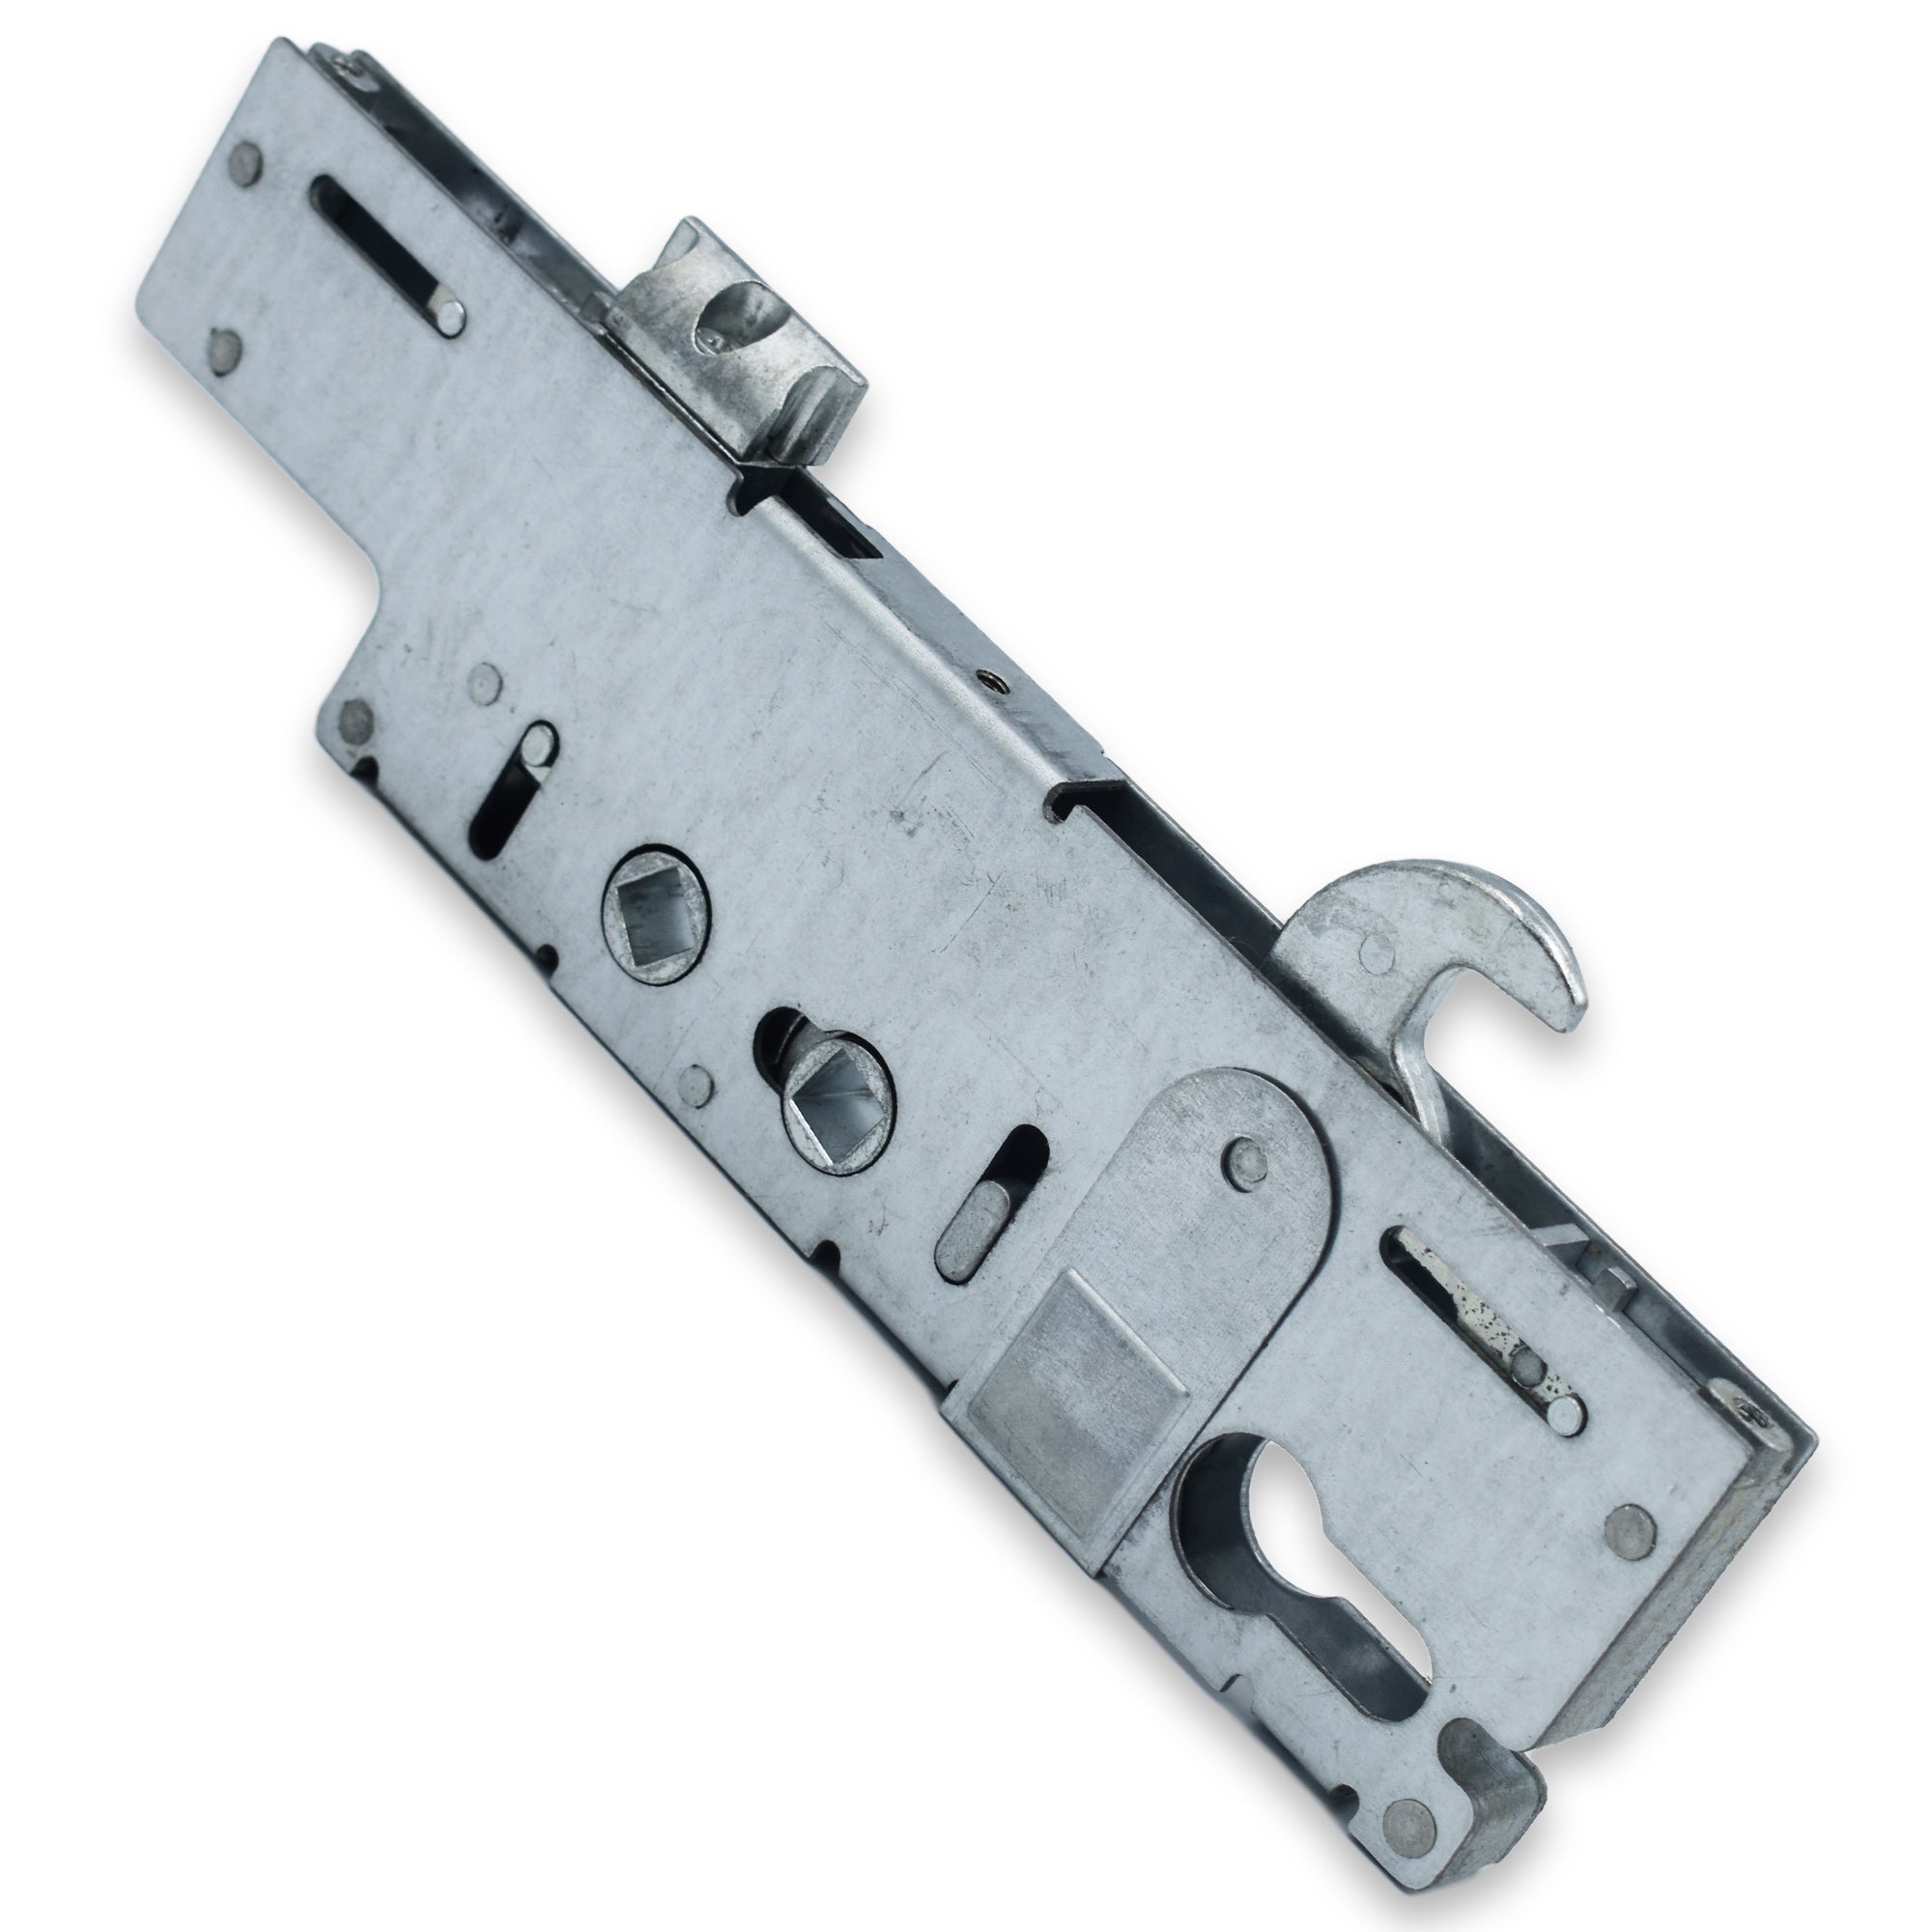 Ingenious Upvc Gear box Door Lock Centre Case 45mm Backset Double Spindle